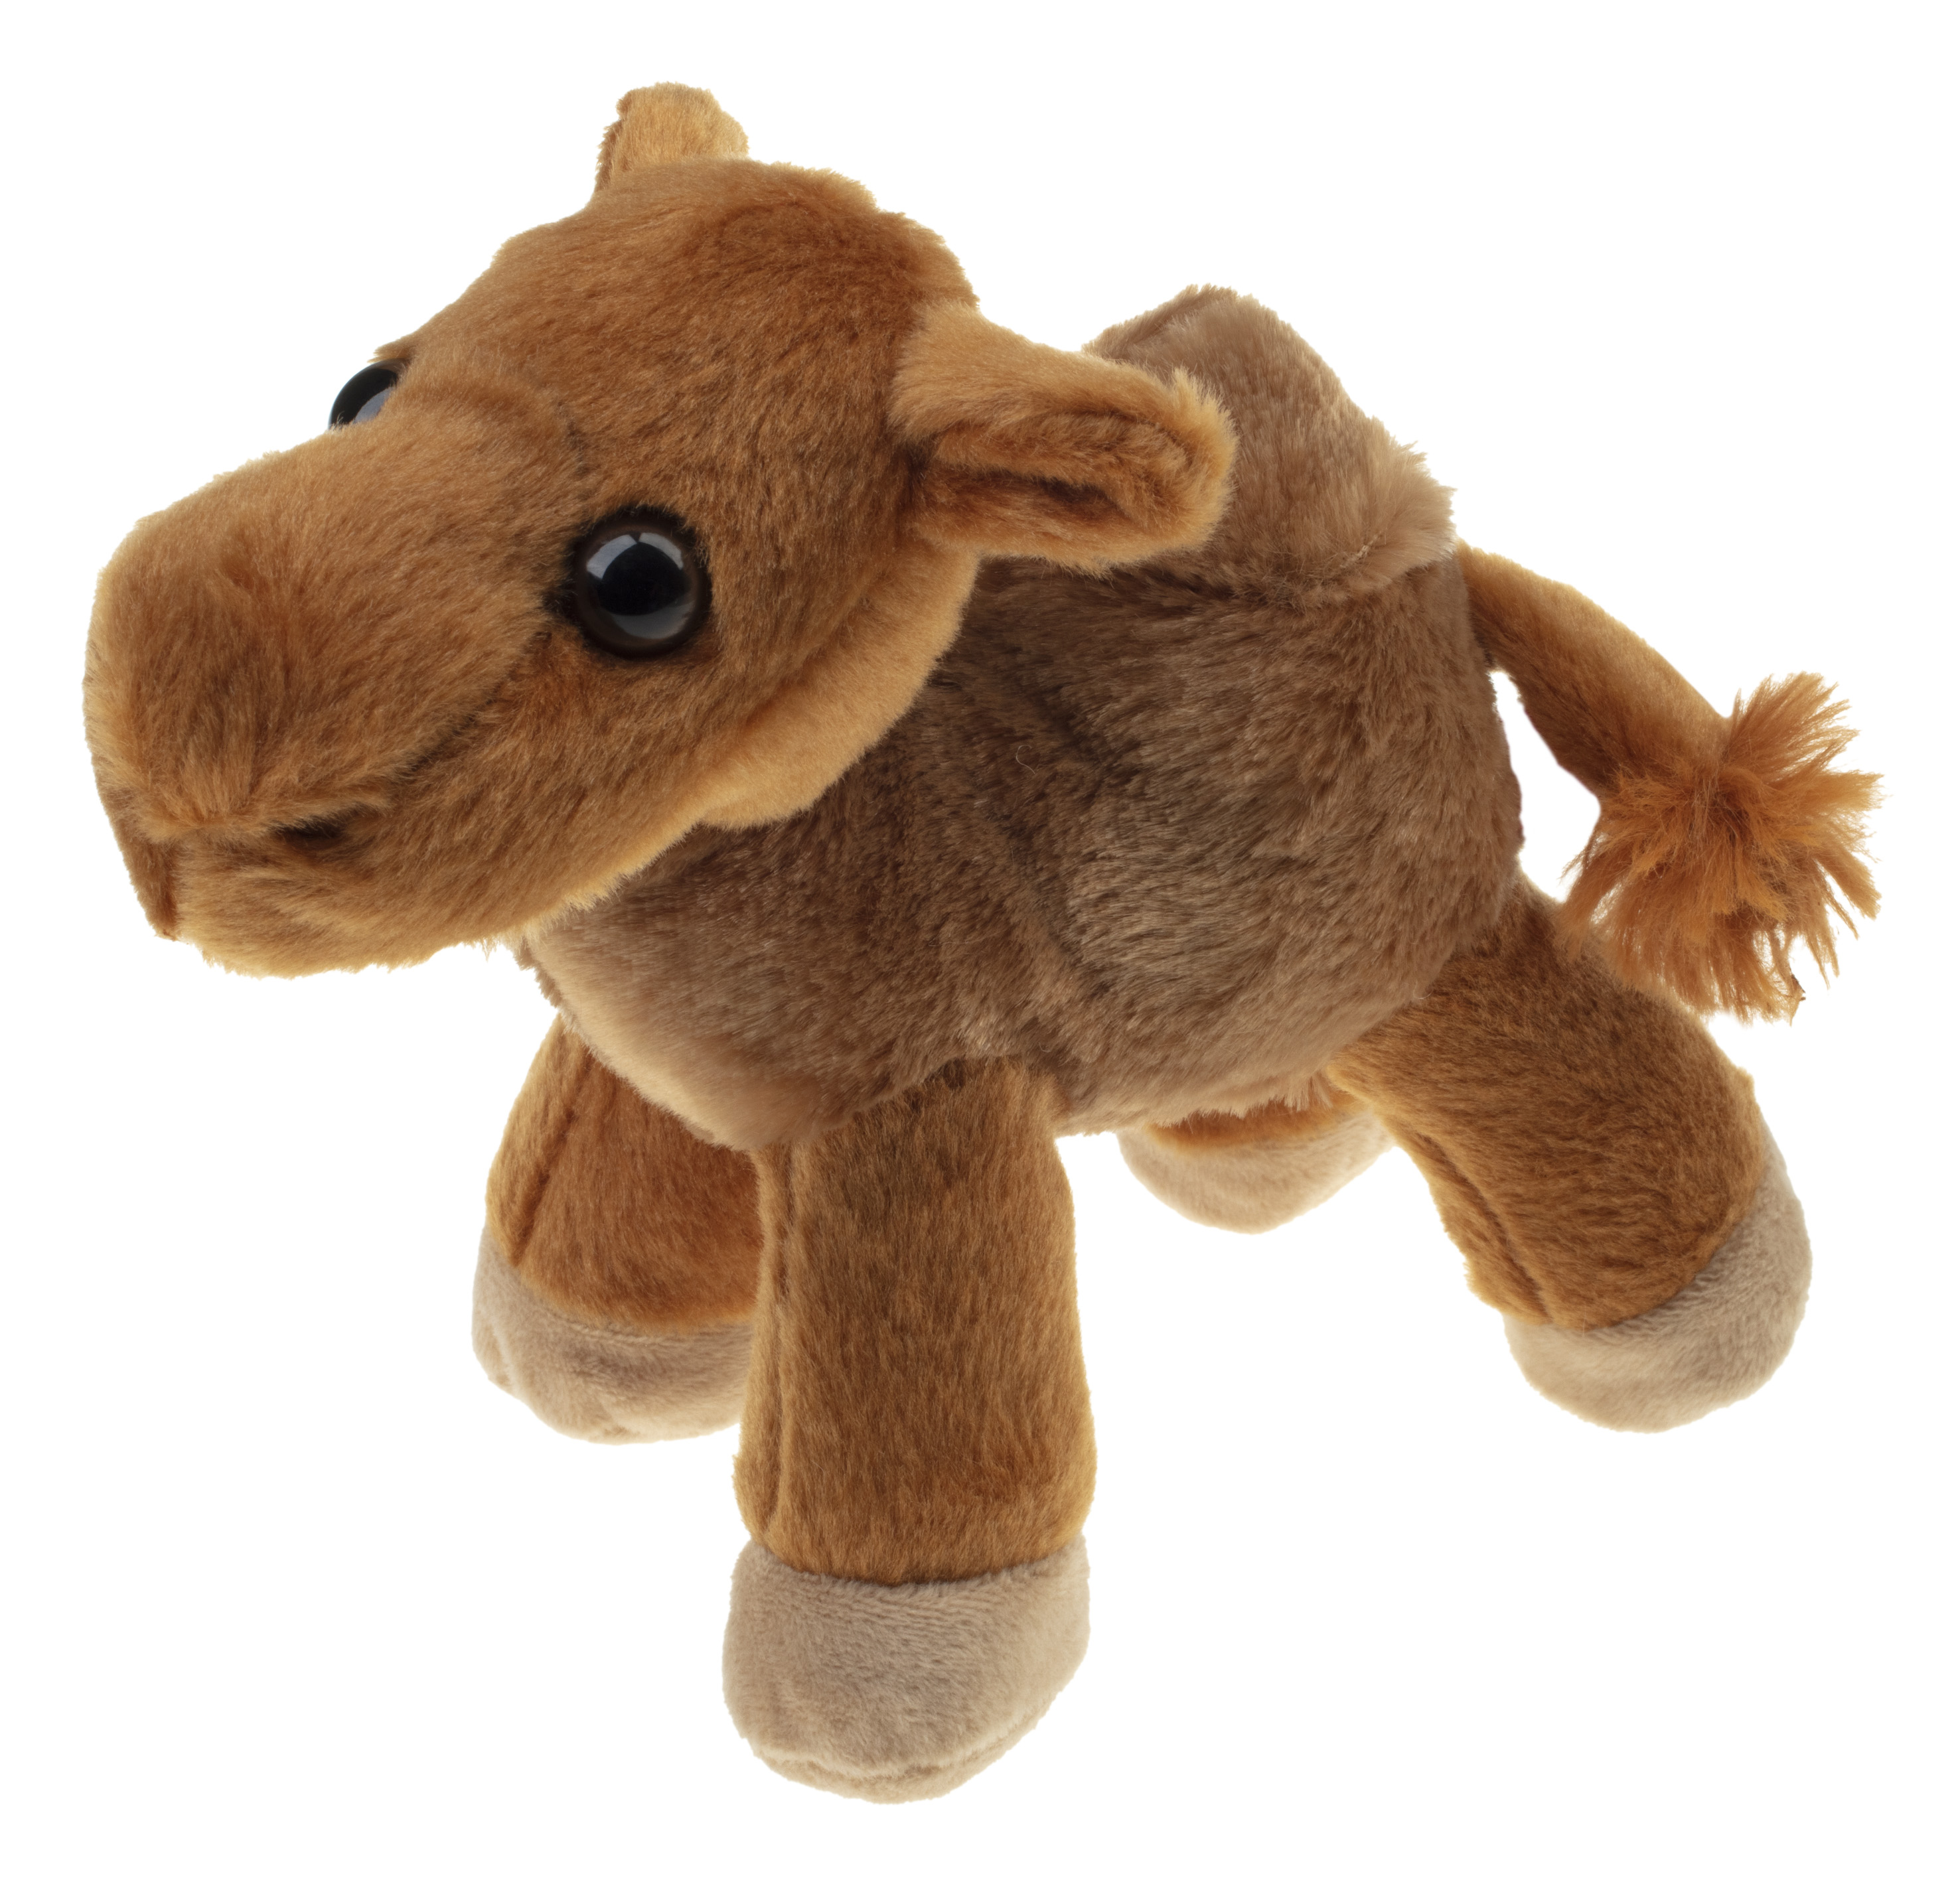 Toy camel